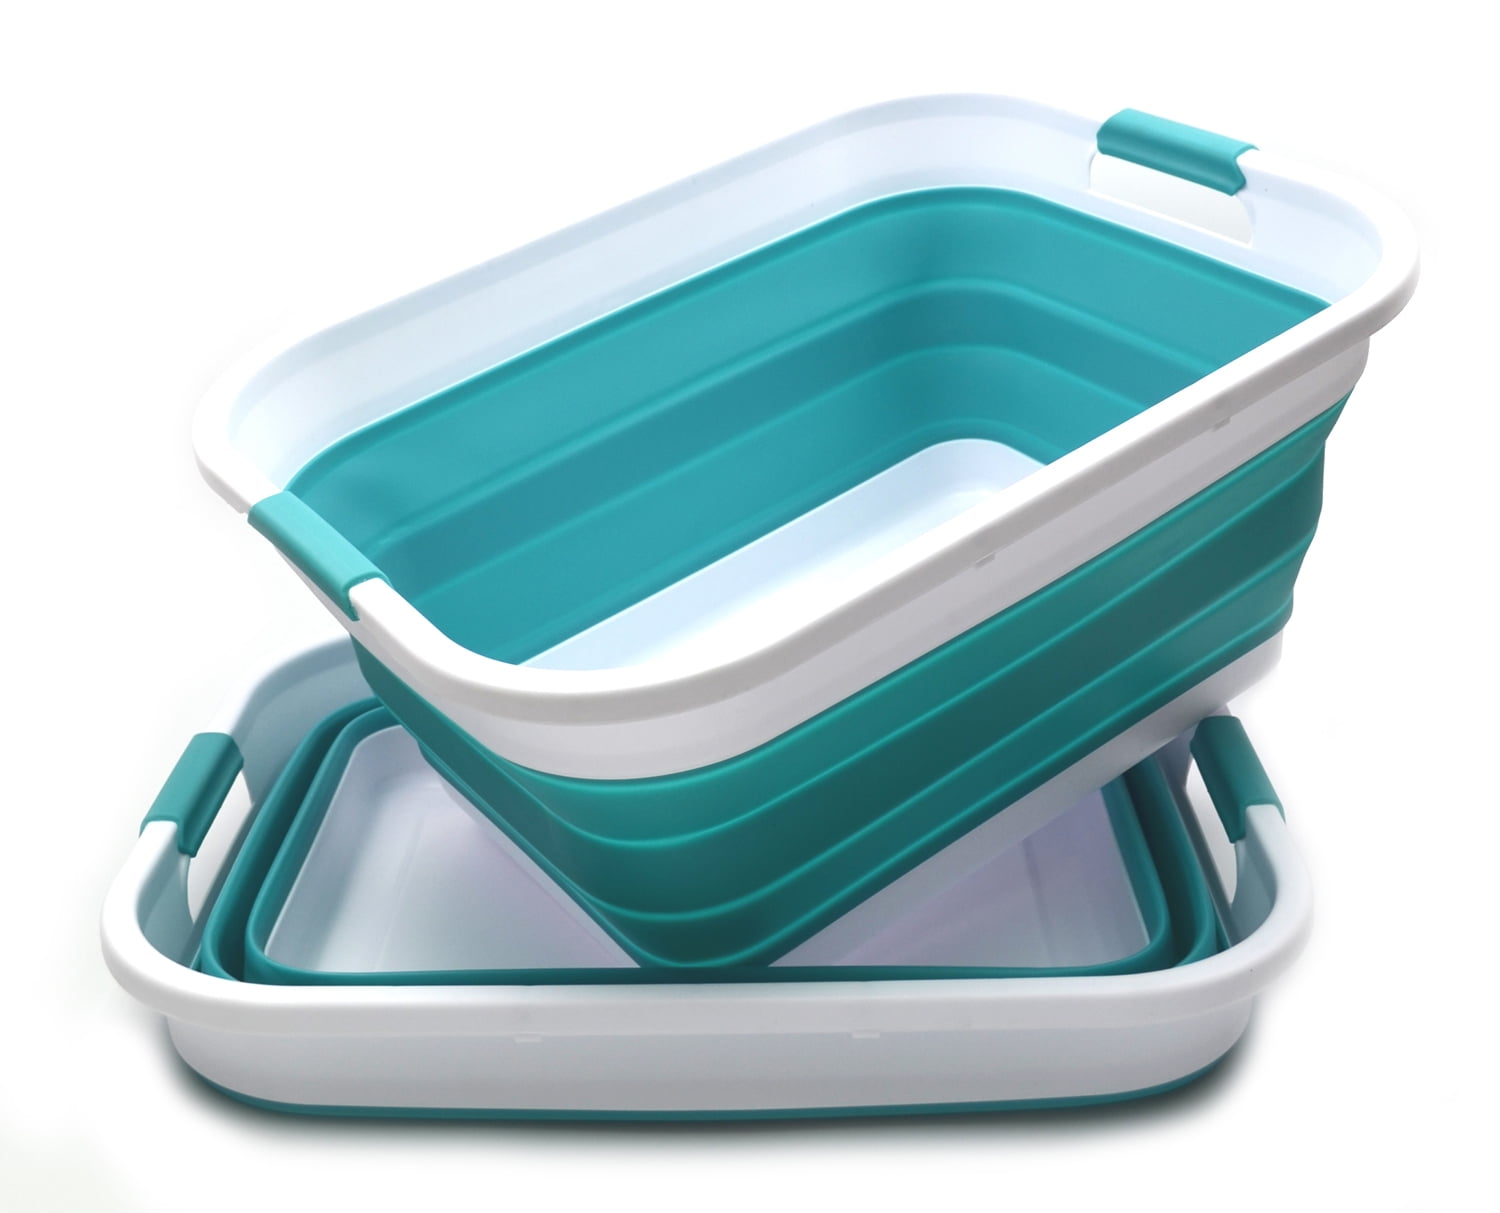 White/Beige, 2 Portable Washing Tub Foldable Pop Up Storage Container/Organizer Space Saving Hamper/Basket SAMMART Collapsible Plastic Laundry Basket 